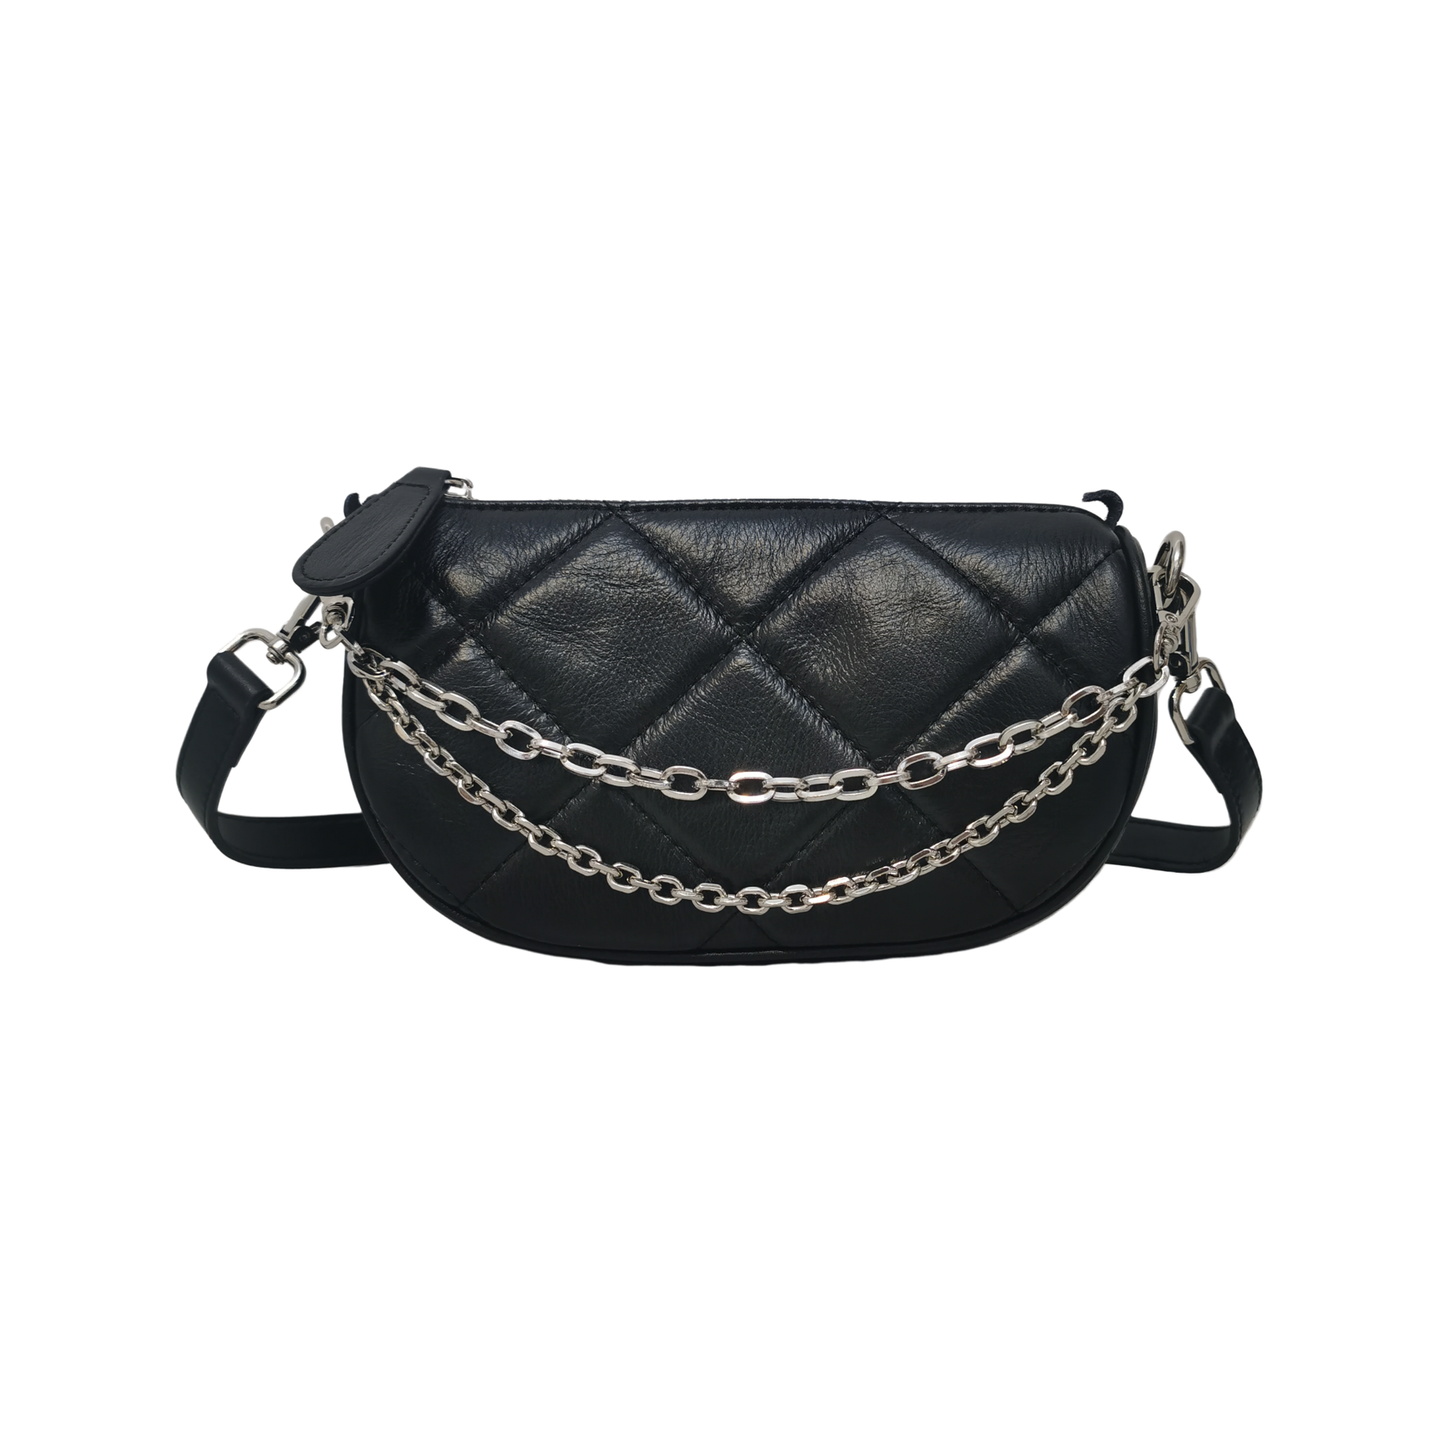 Women's genuine cowhide leather handbag Carly vyar design